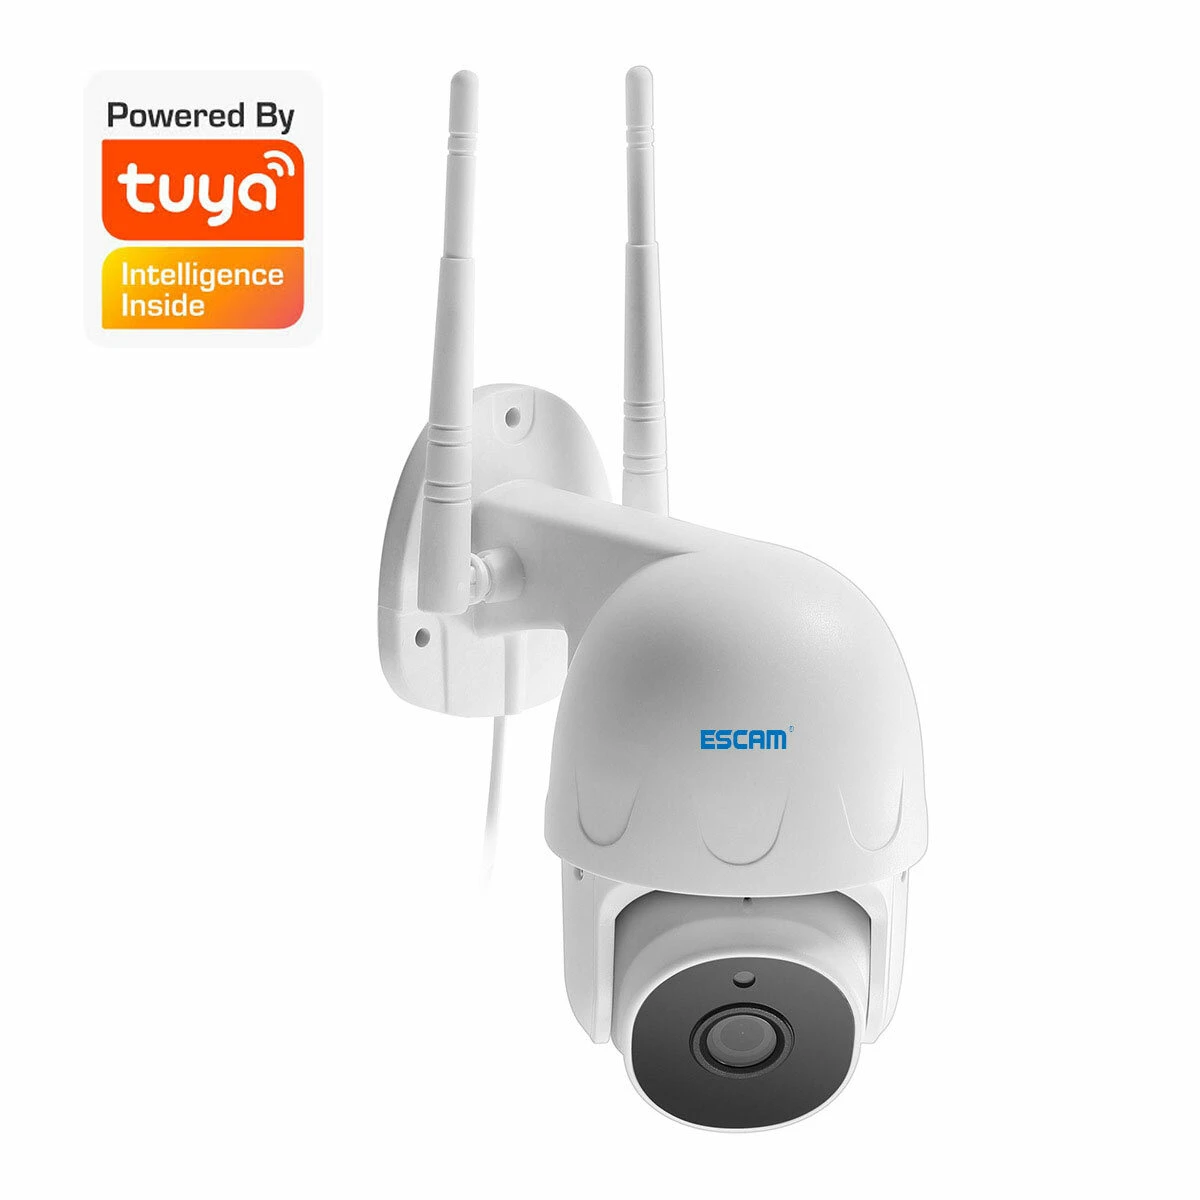 Escam ty100 tuya h.265 wifi ip camera 1080p pan/tilt outdoor two way audio voice alarm wifi camera waterproof night vision surveillance